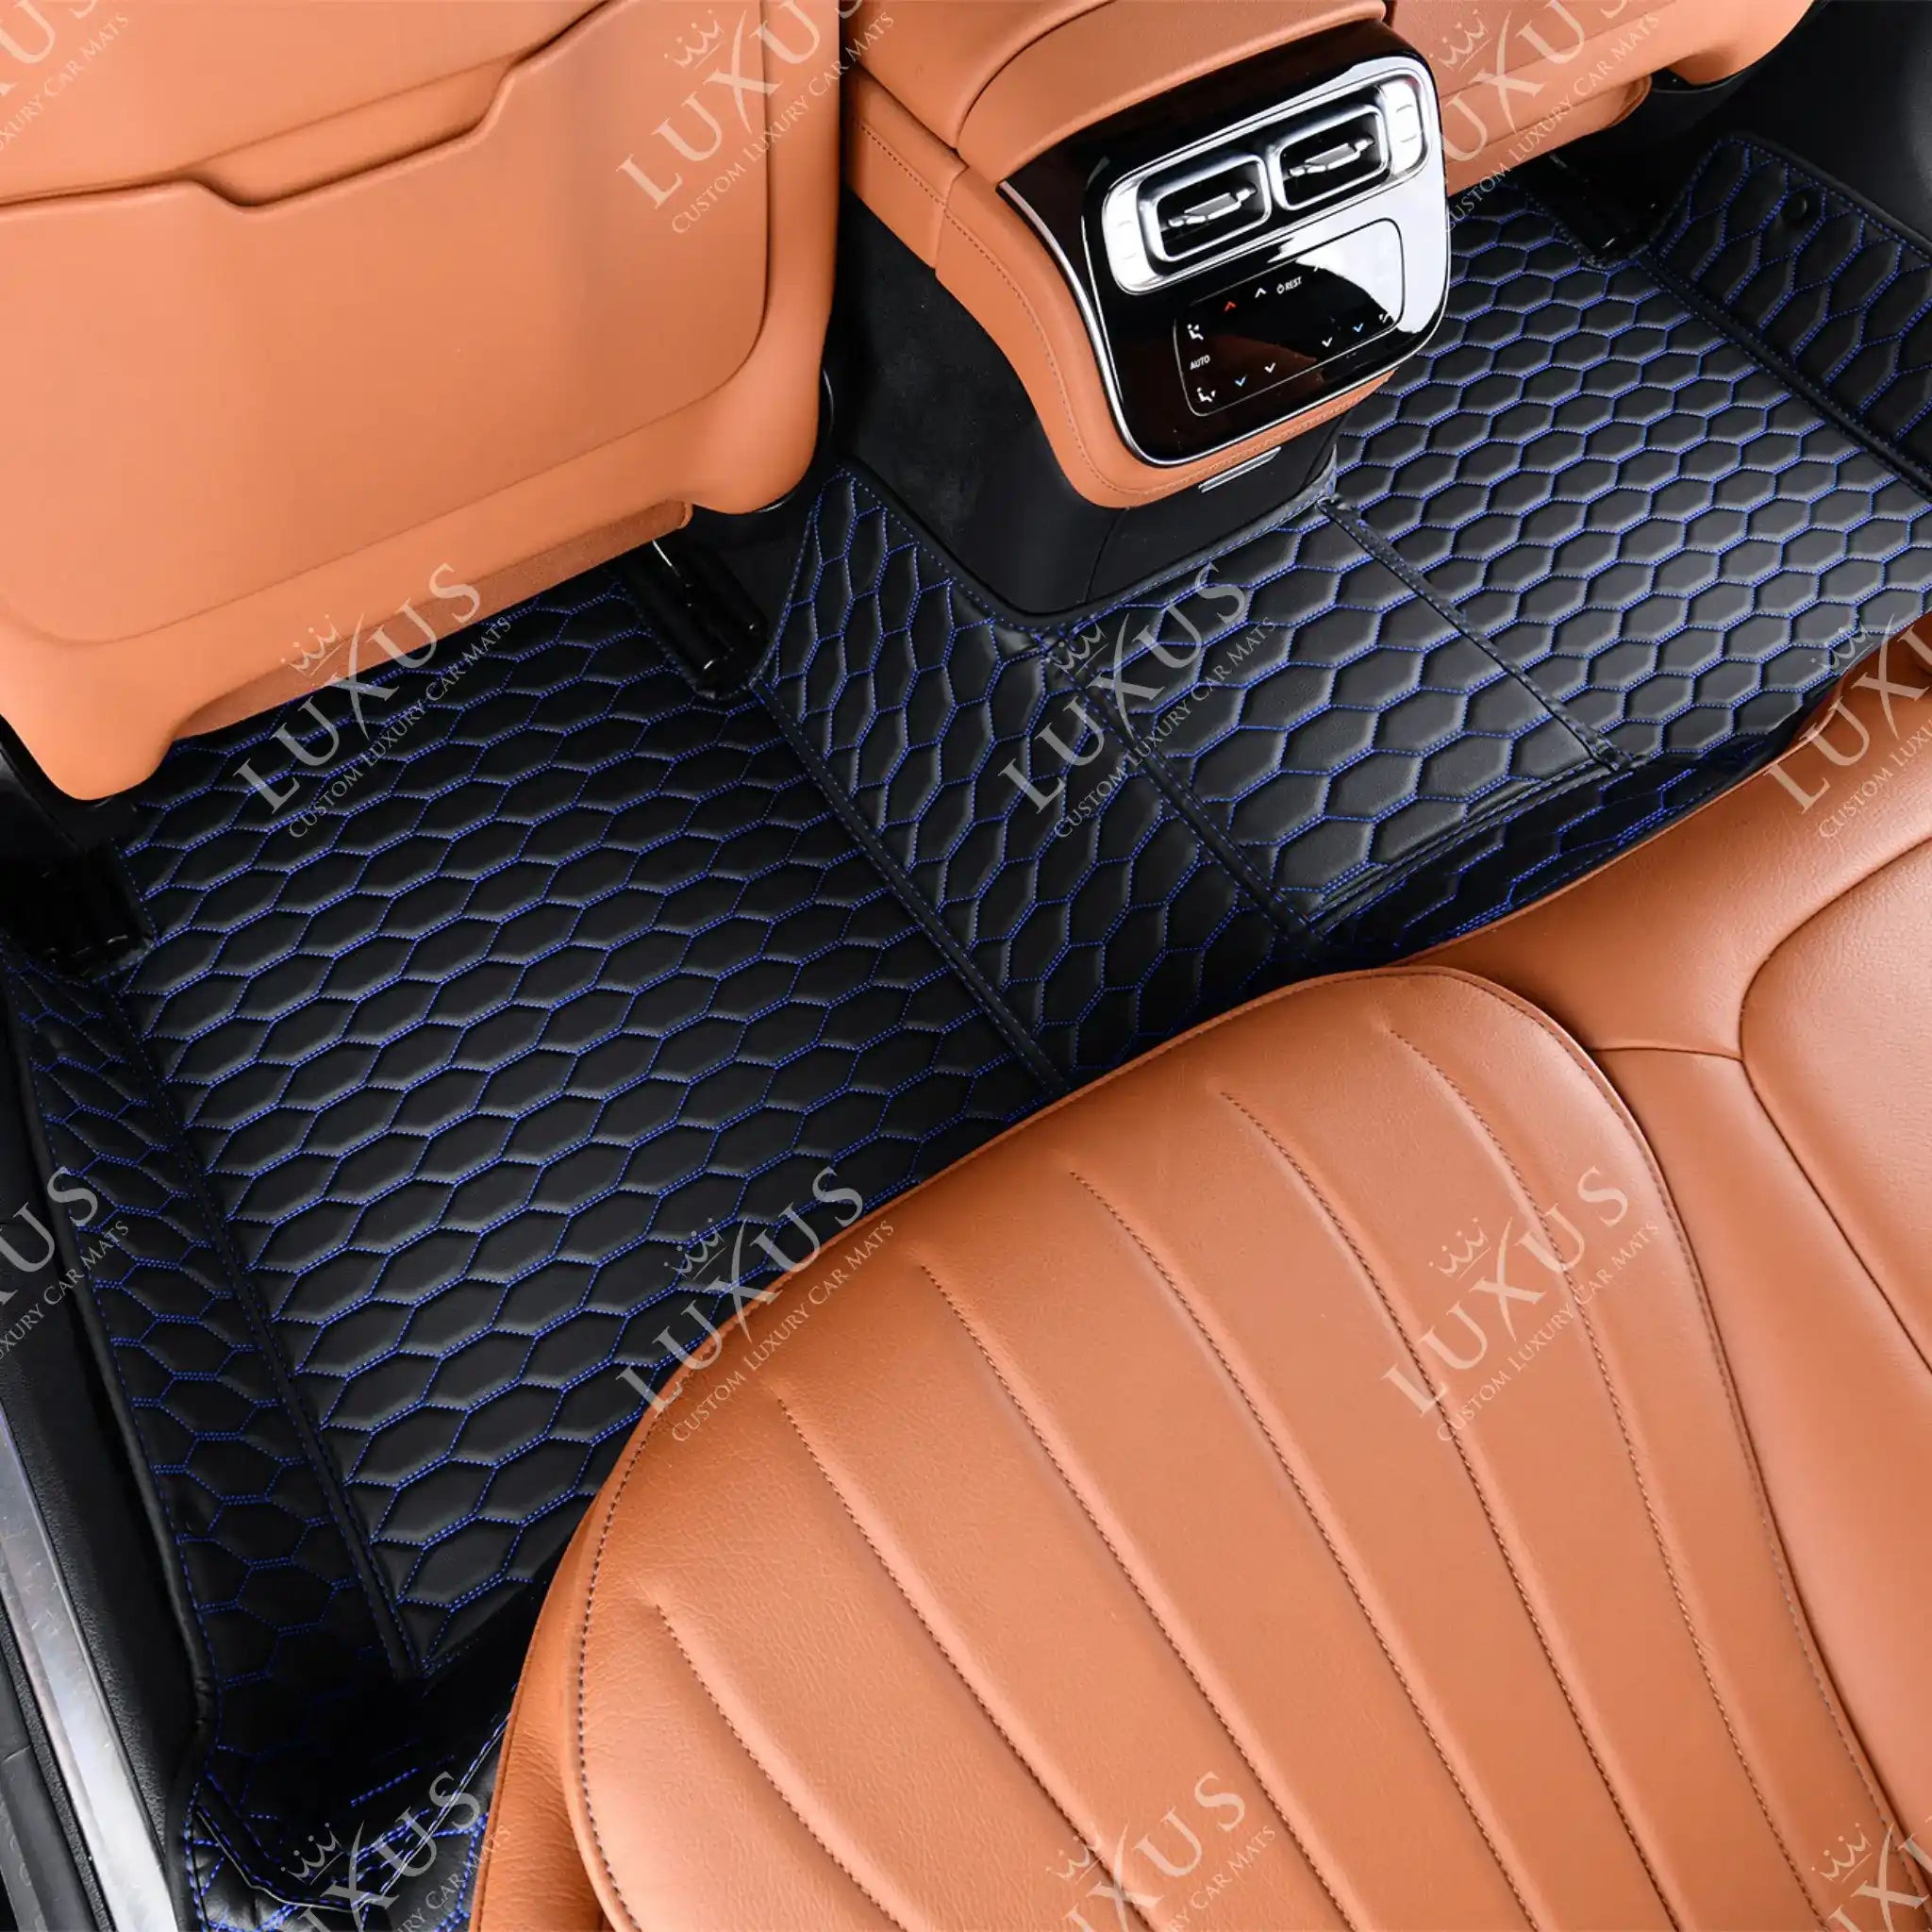 NEW Black & Blue Stitching Honeycomb Luxury Car Mats Set